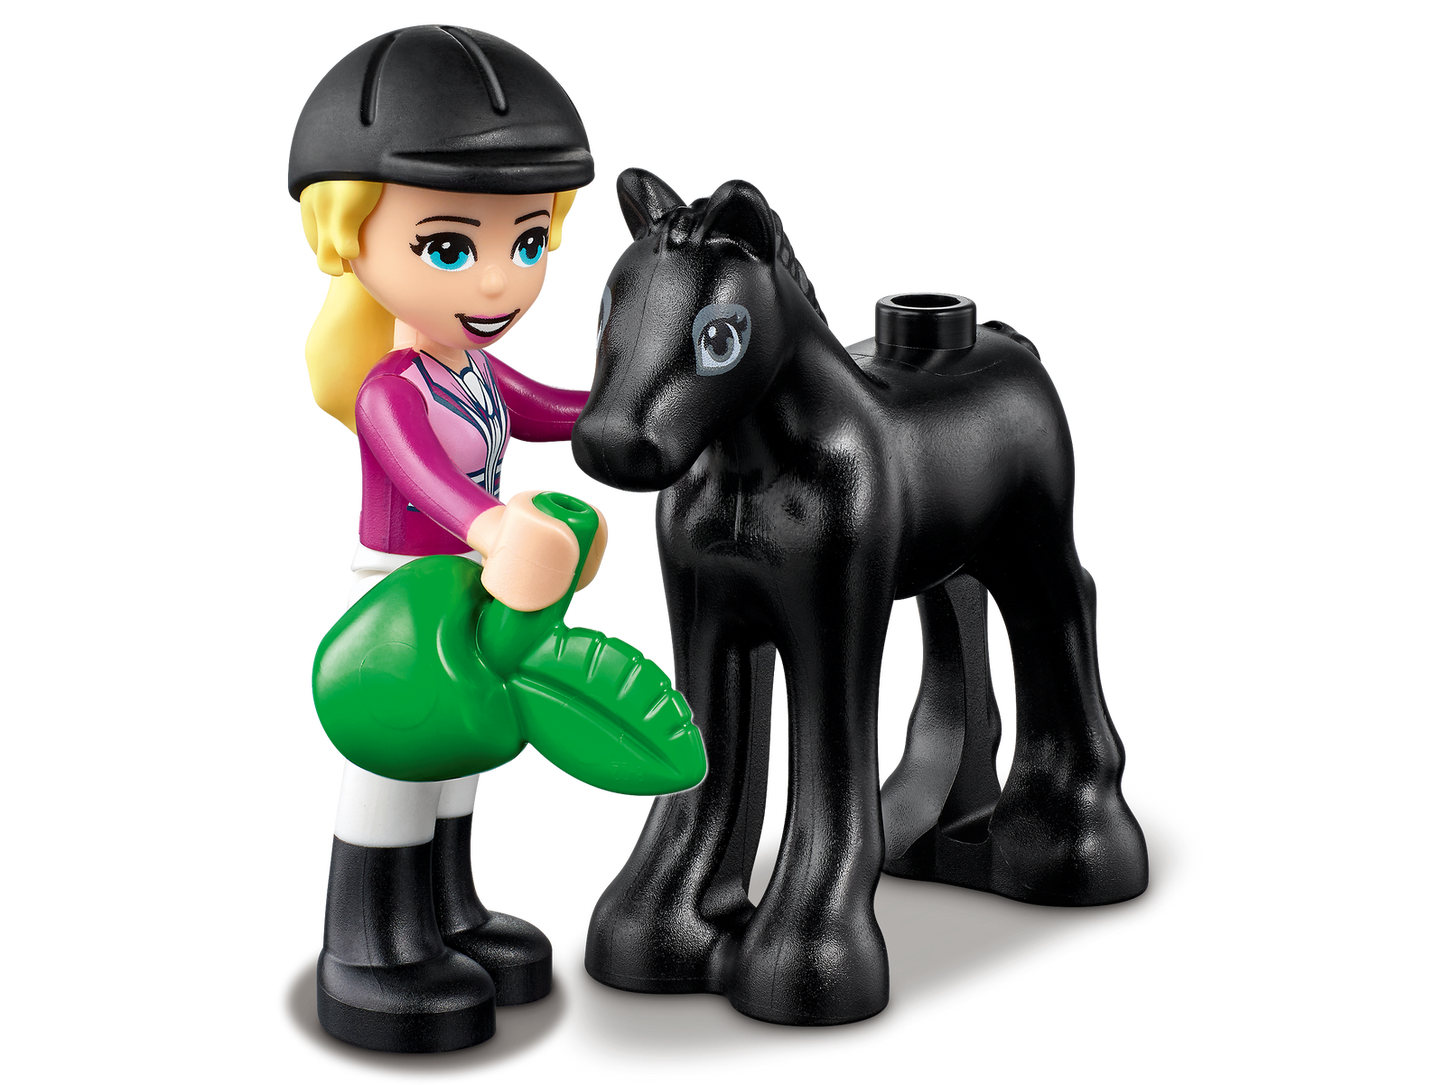 Lego Friends Horse Training & Trailer 41441